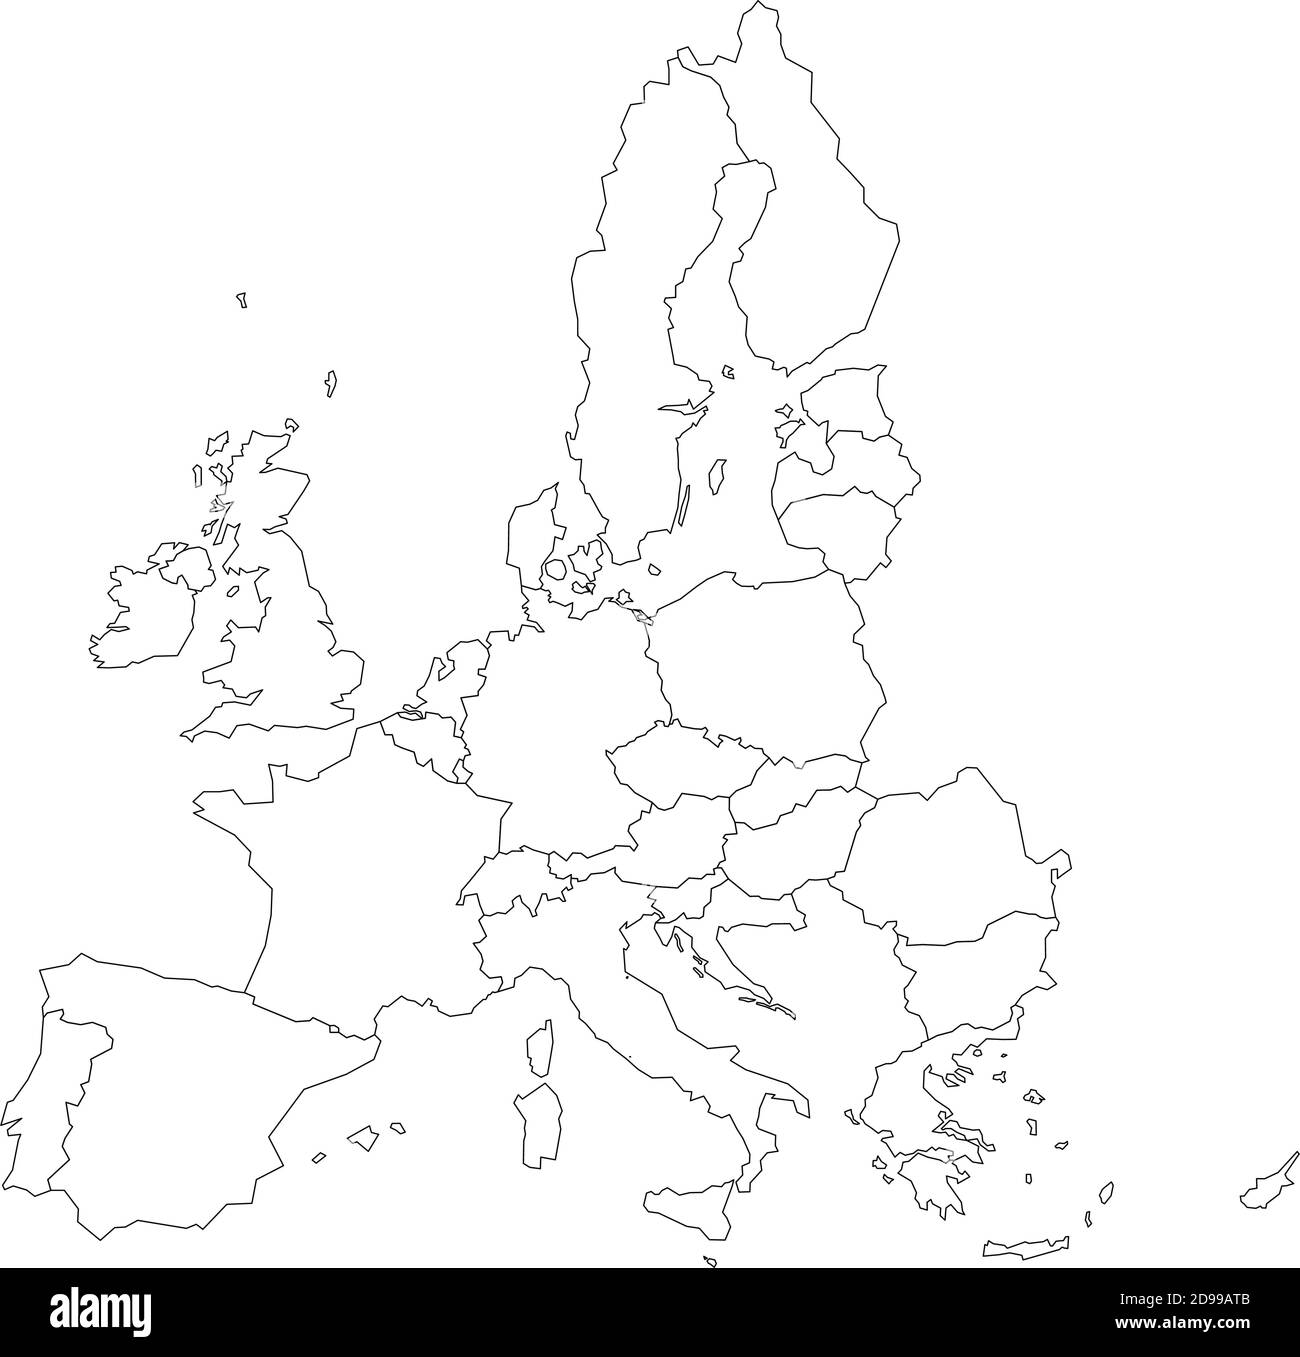 European union map Black and White Stock Photos & Images - Alamy